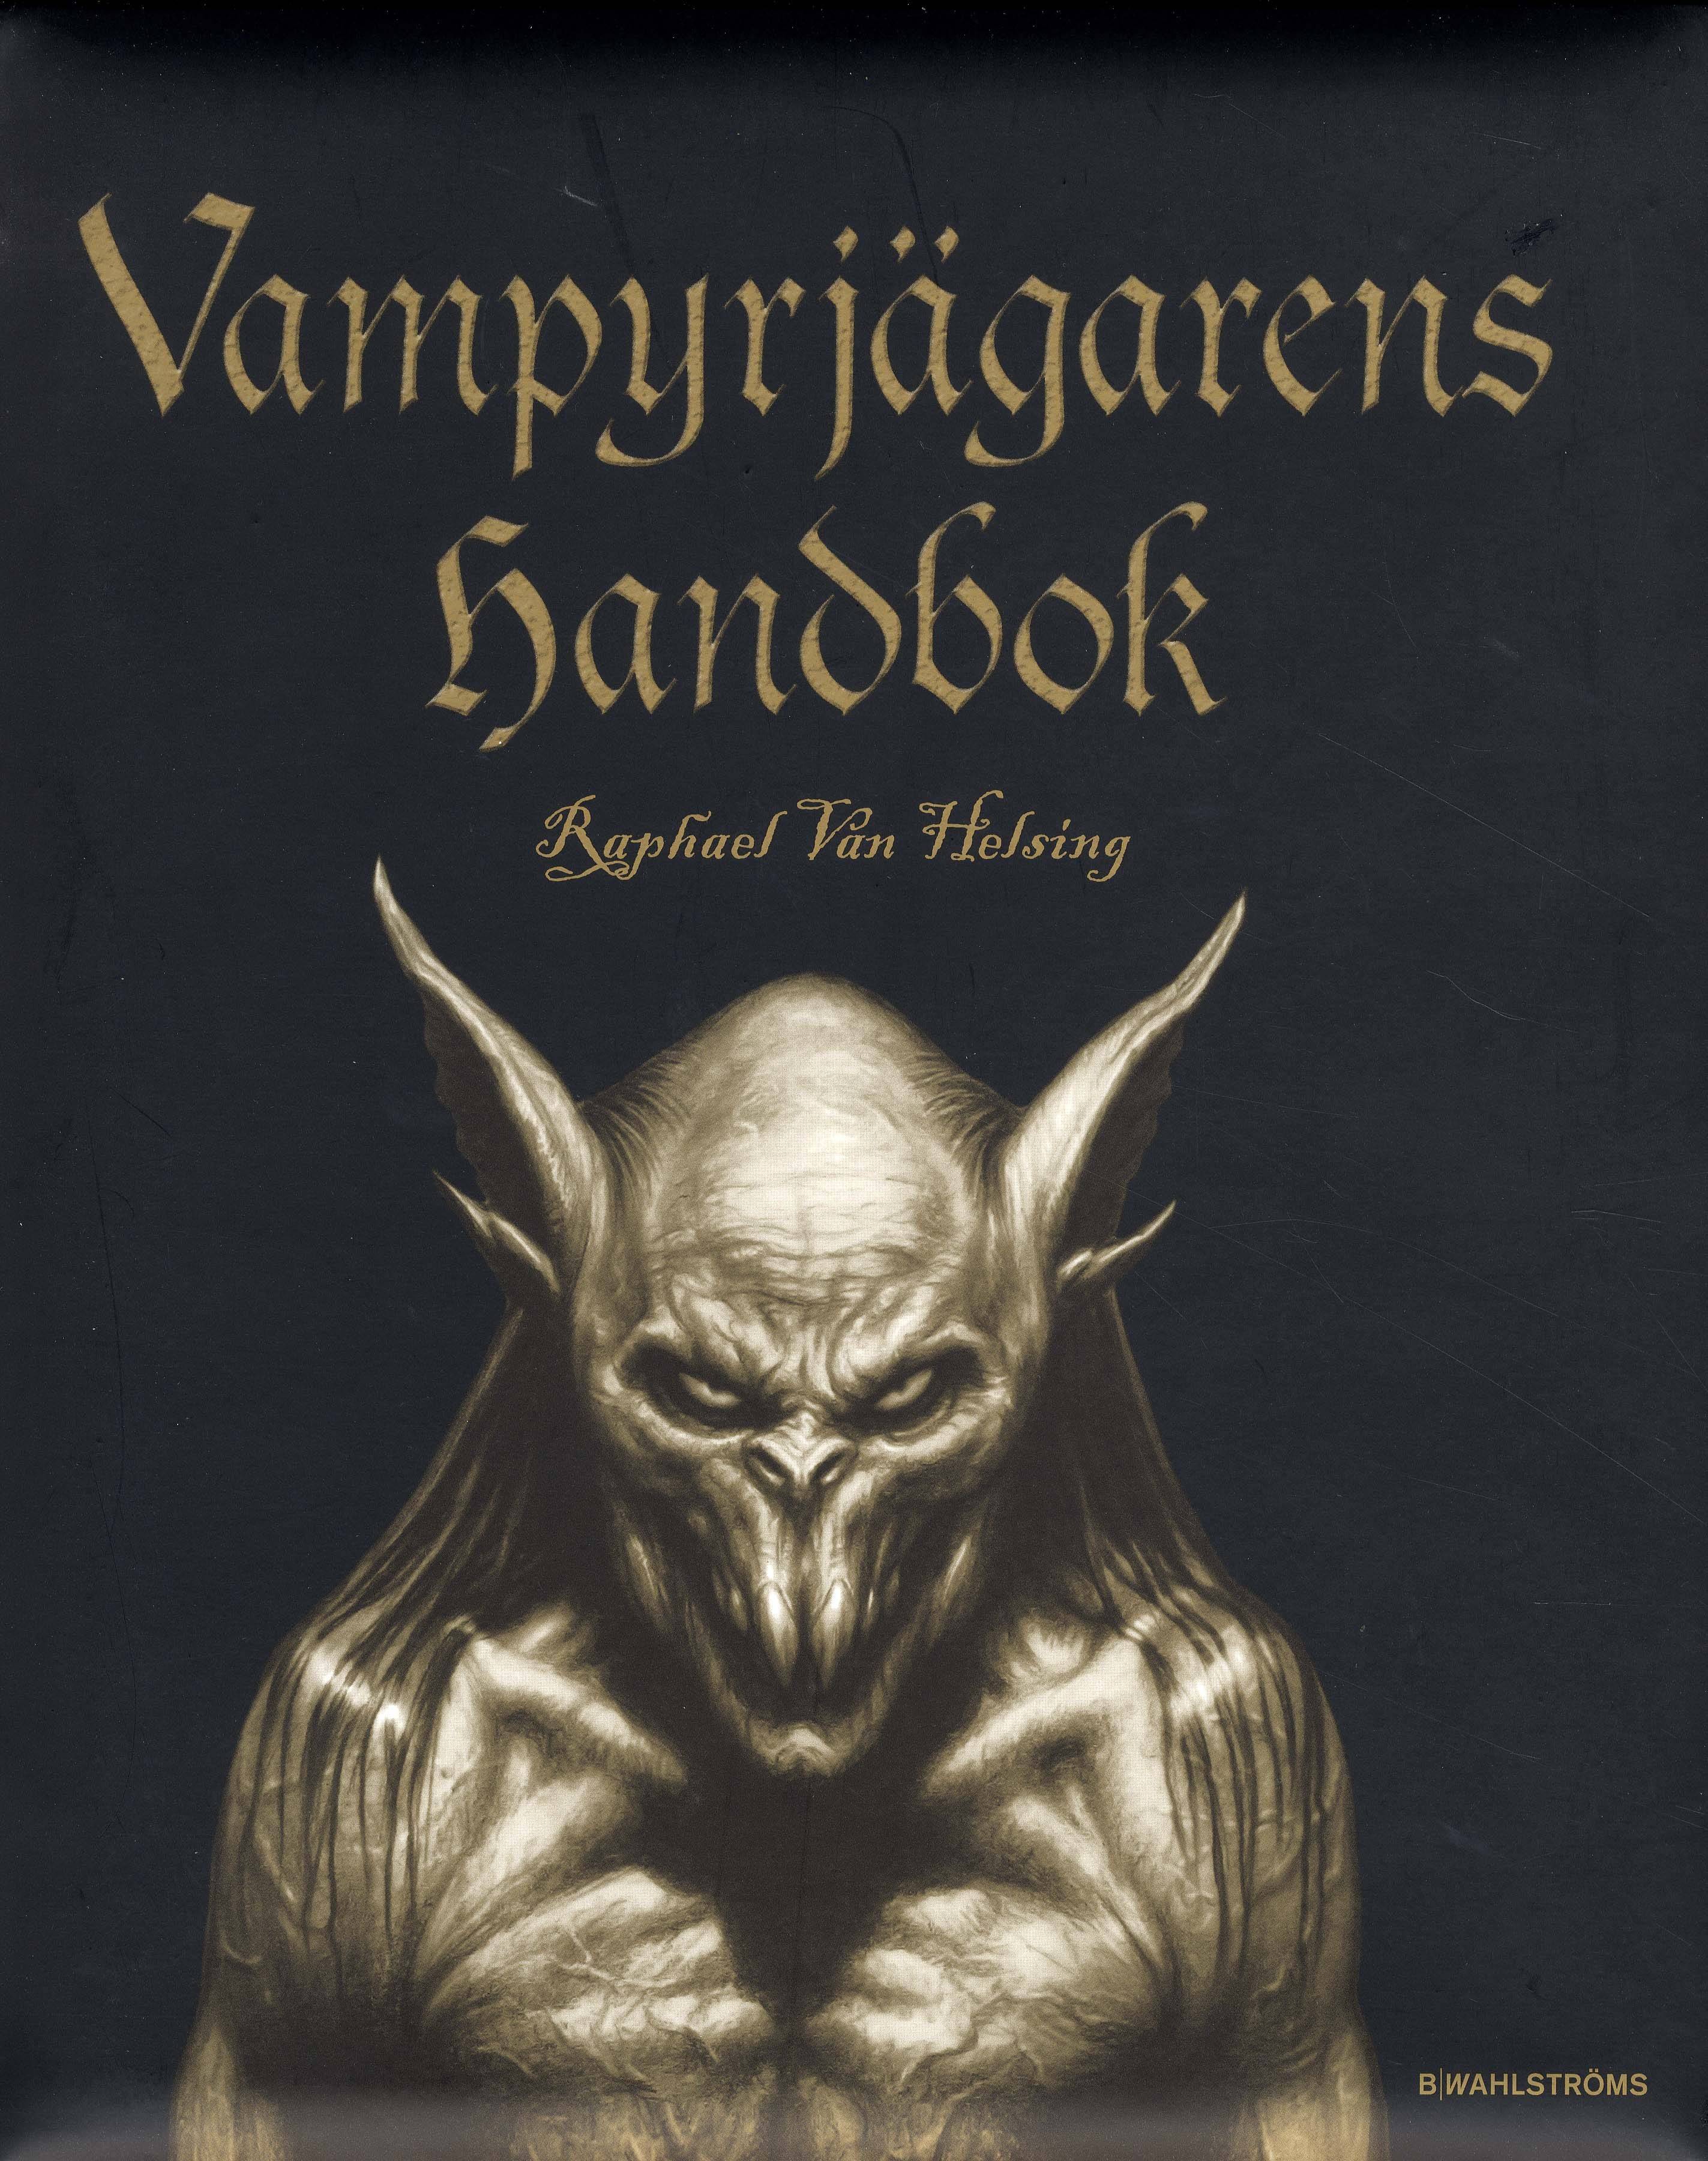 Vampyrjägarens handbok